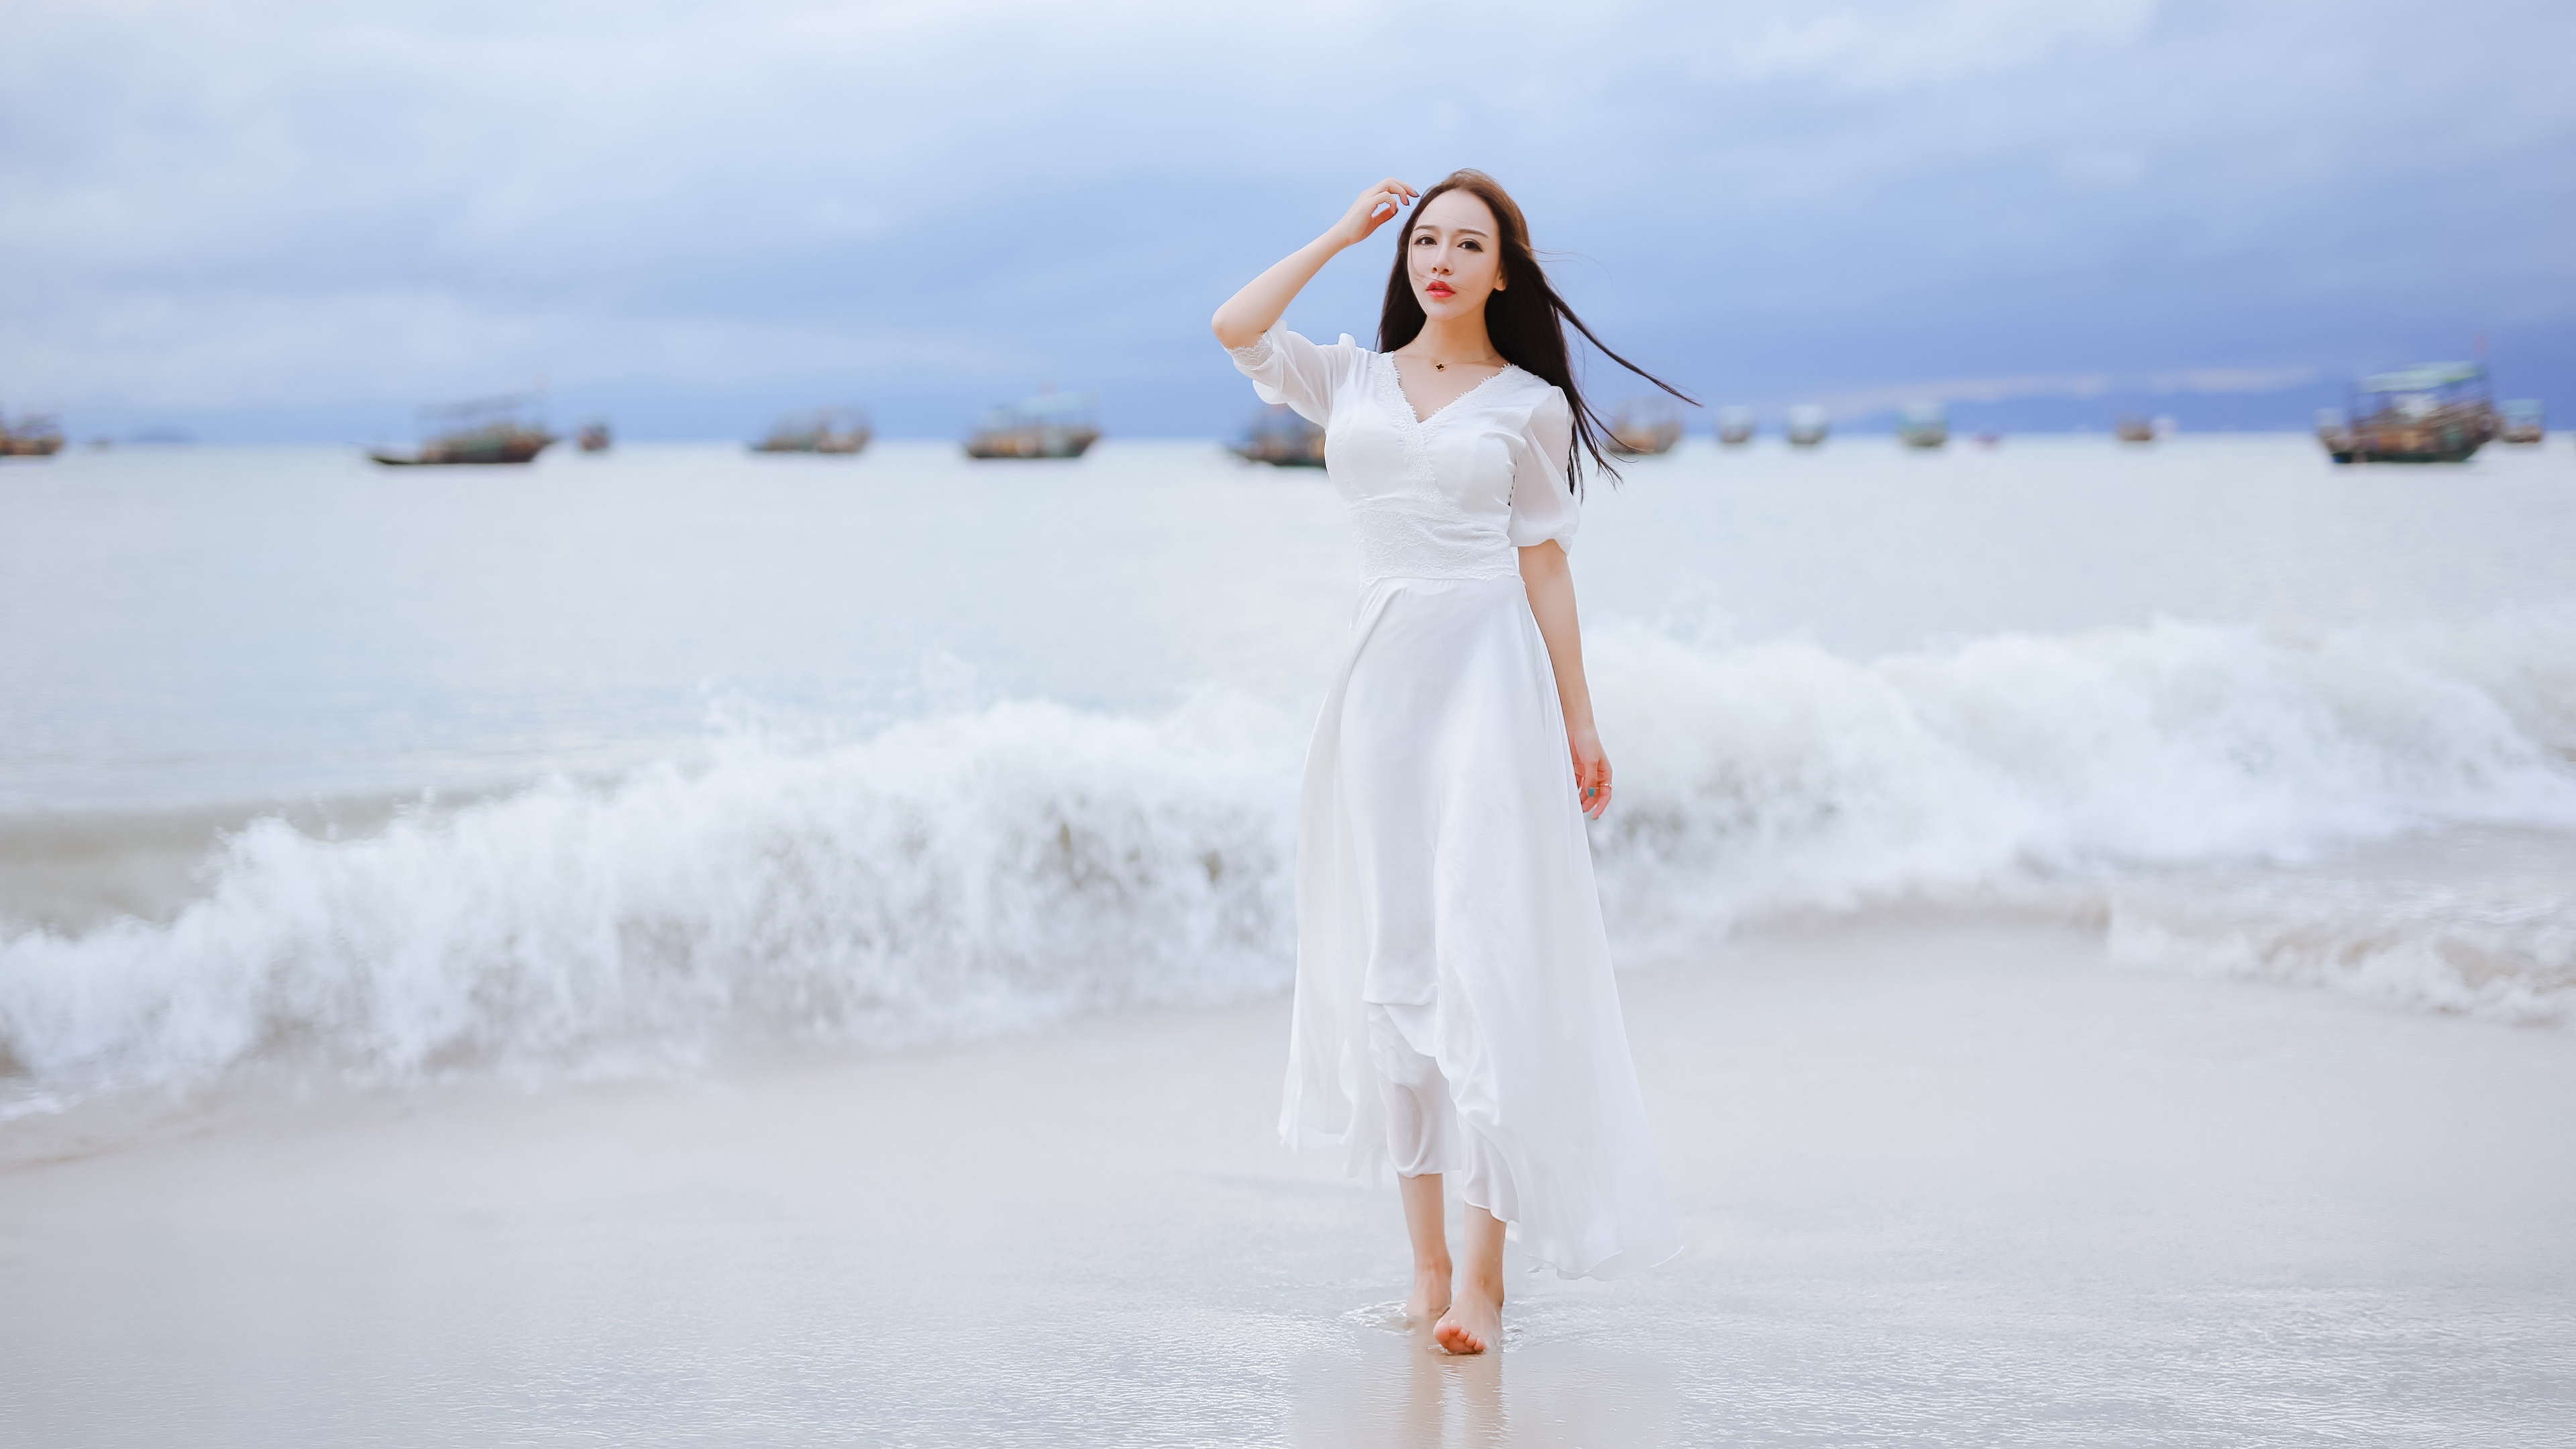 【1920x1200】写给海洋 唯美海边沙滩 白色裙子美女舞蹈桌面壁纸 - 彼岸桌面